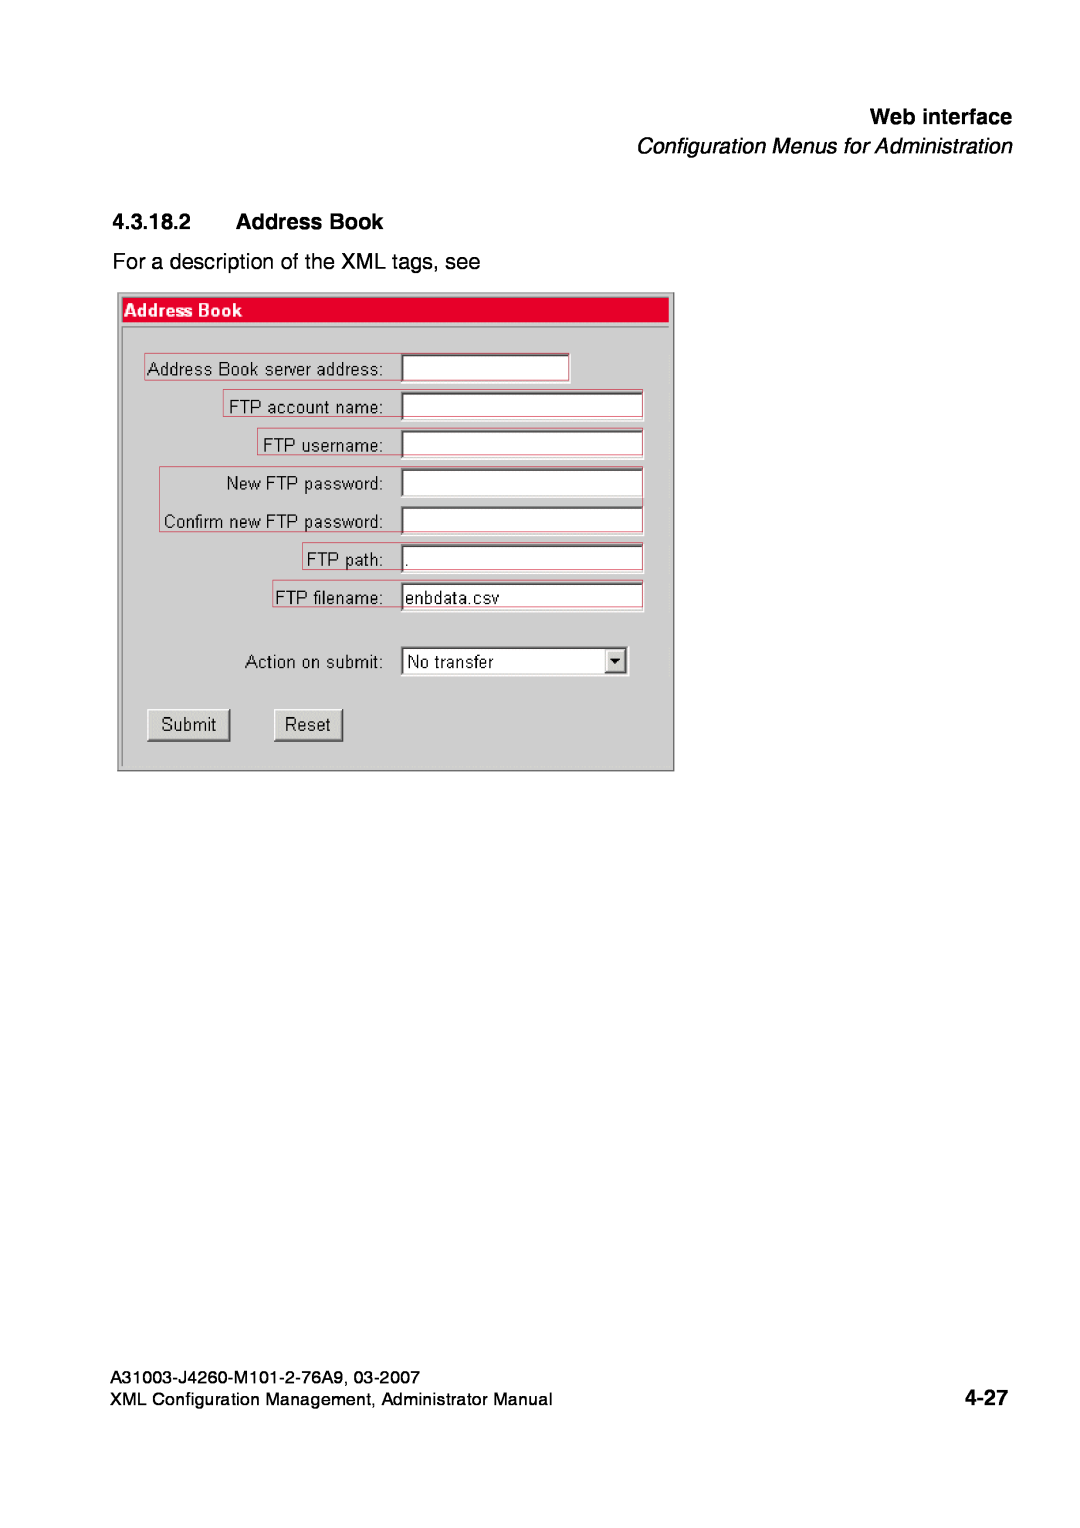 Siemens 410 S V6.0, 420 S V6.0 manual Address Book, 4-27, Web interface, Configuration Menus for Administration 